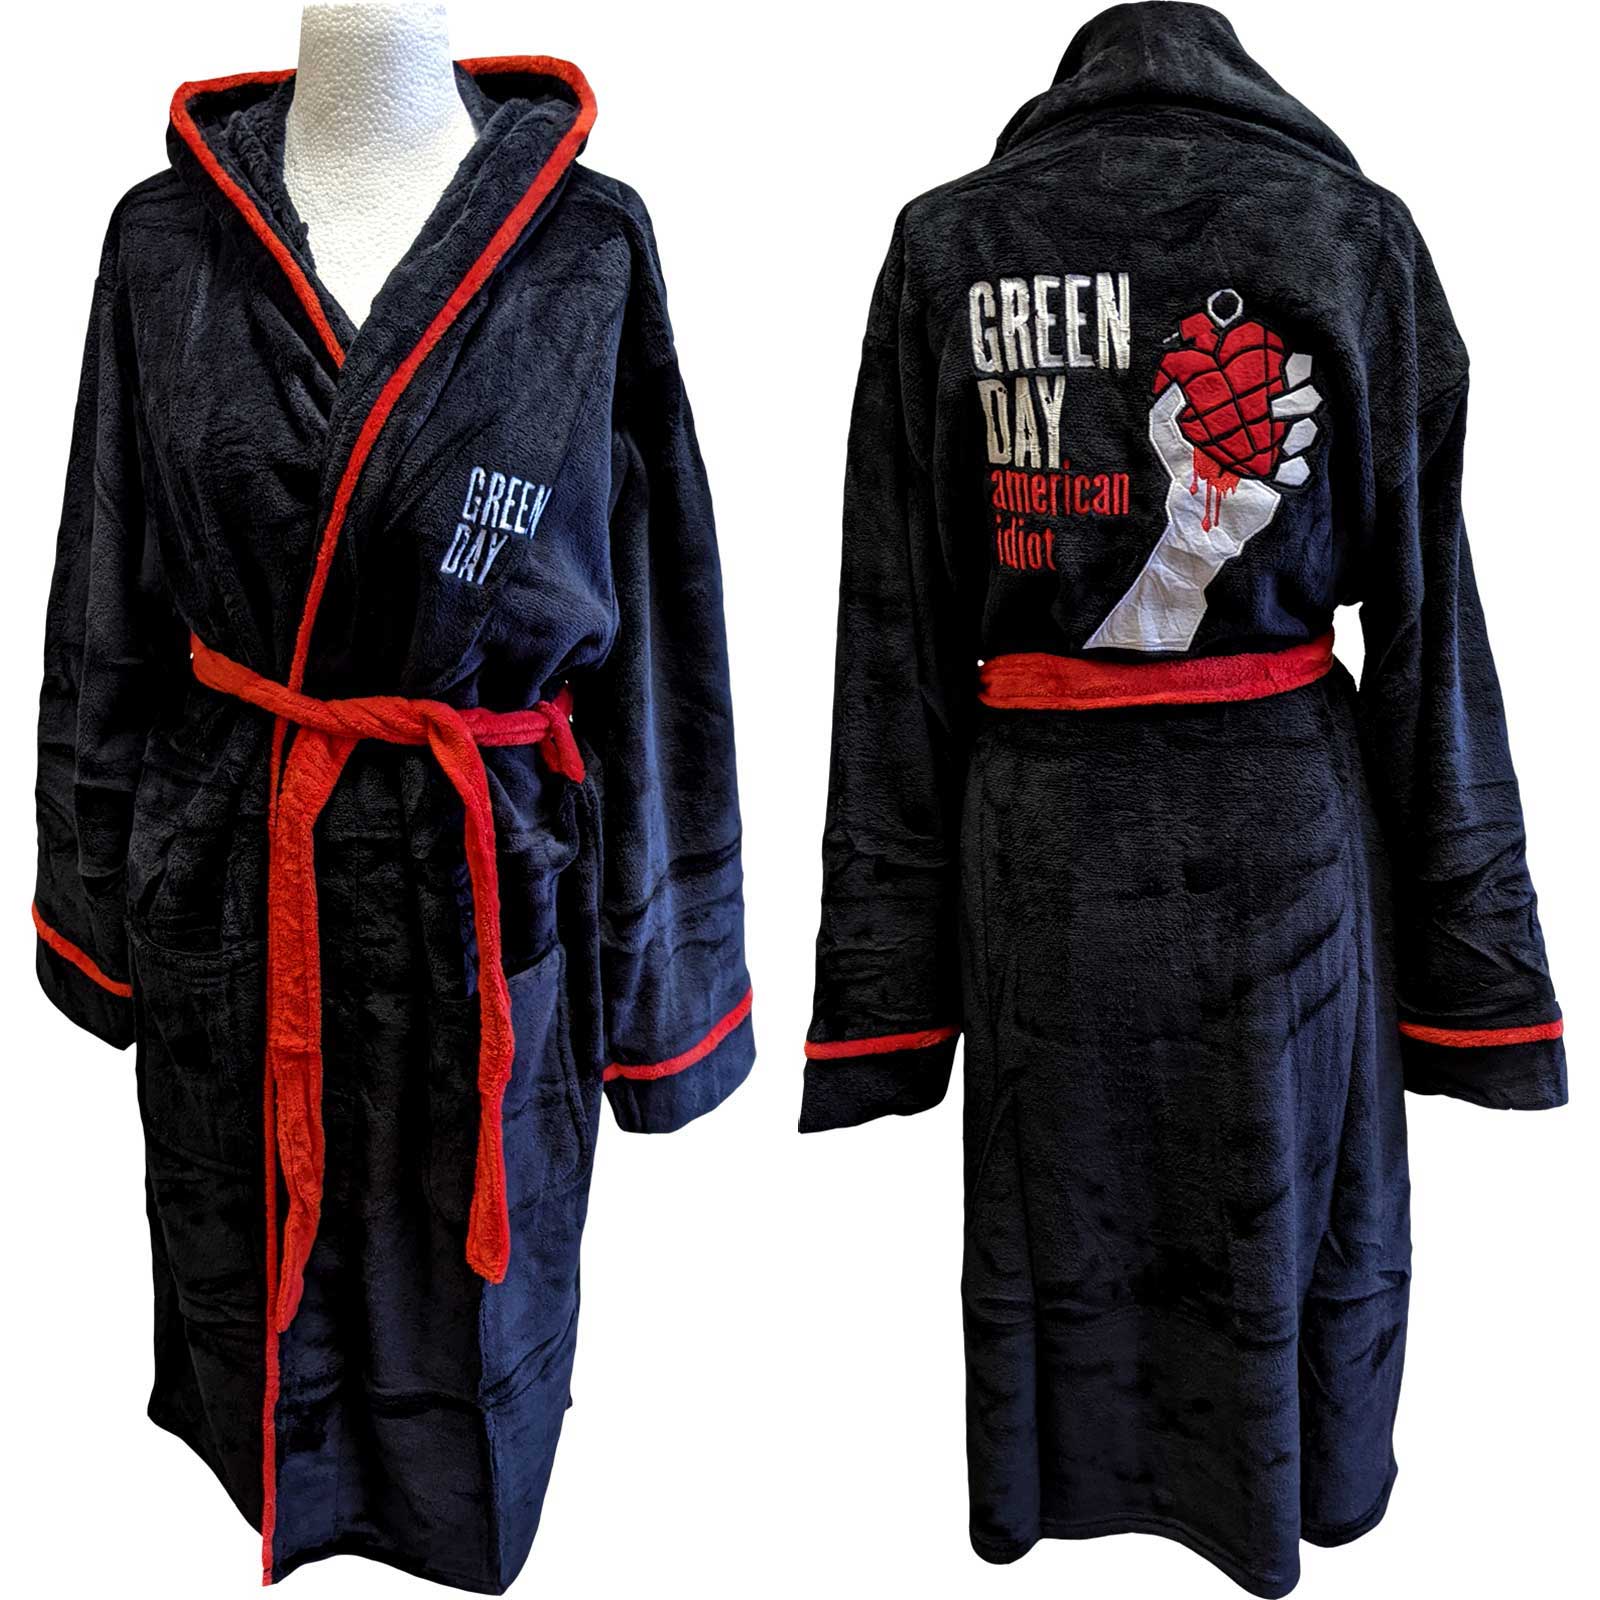 Green Day - American Idiot Bathrobe Dressing Gown